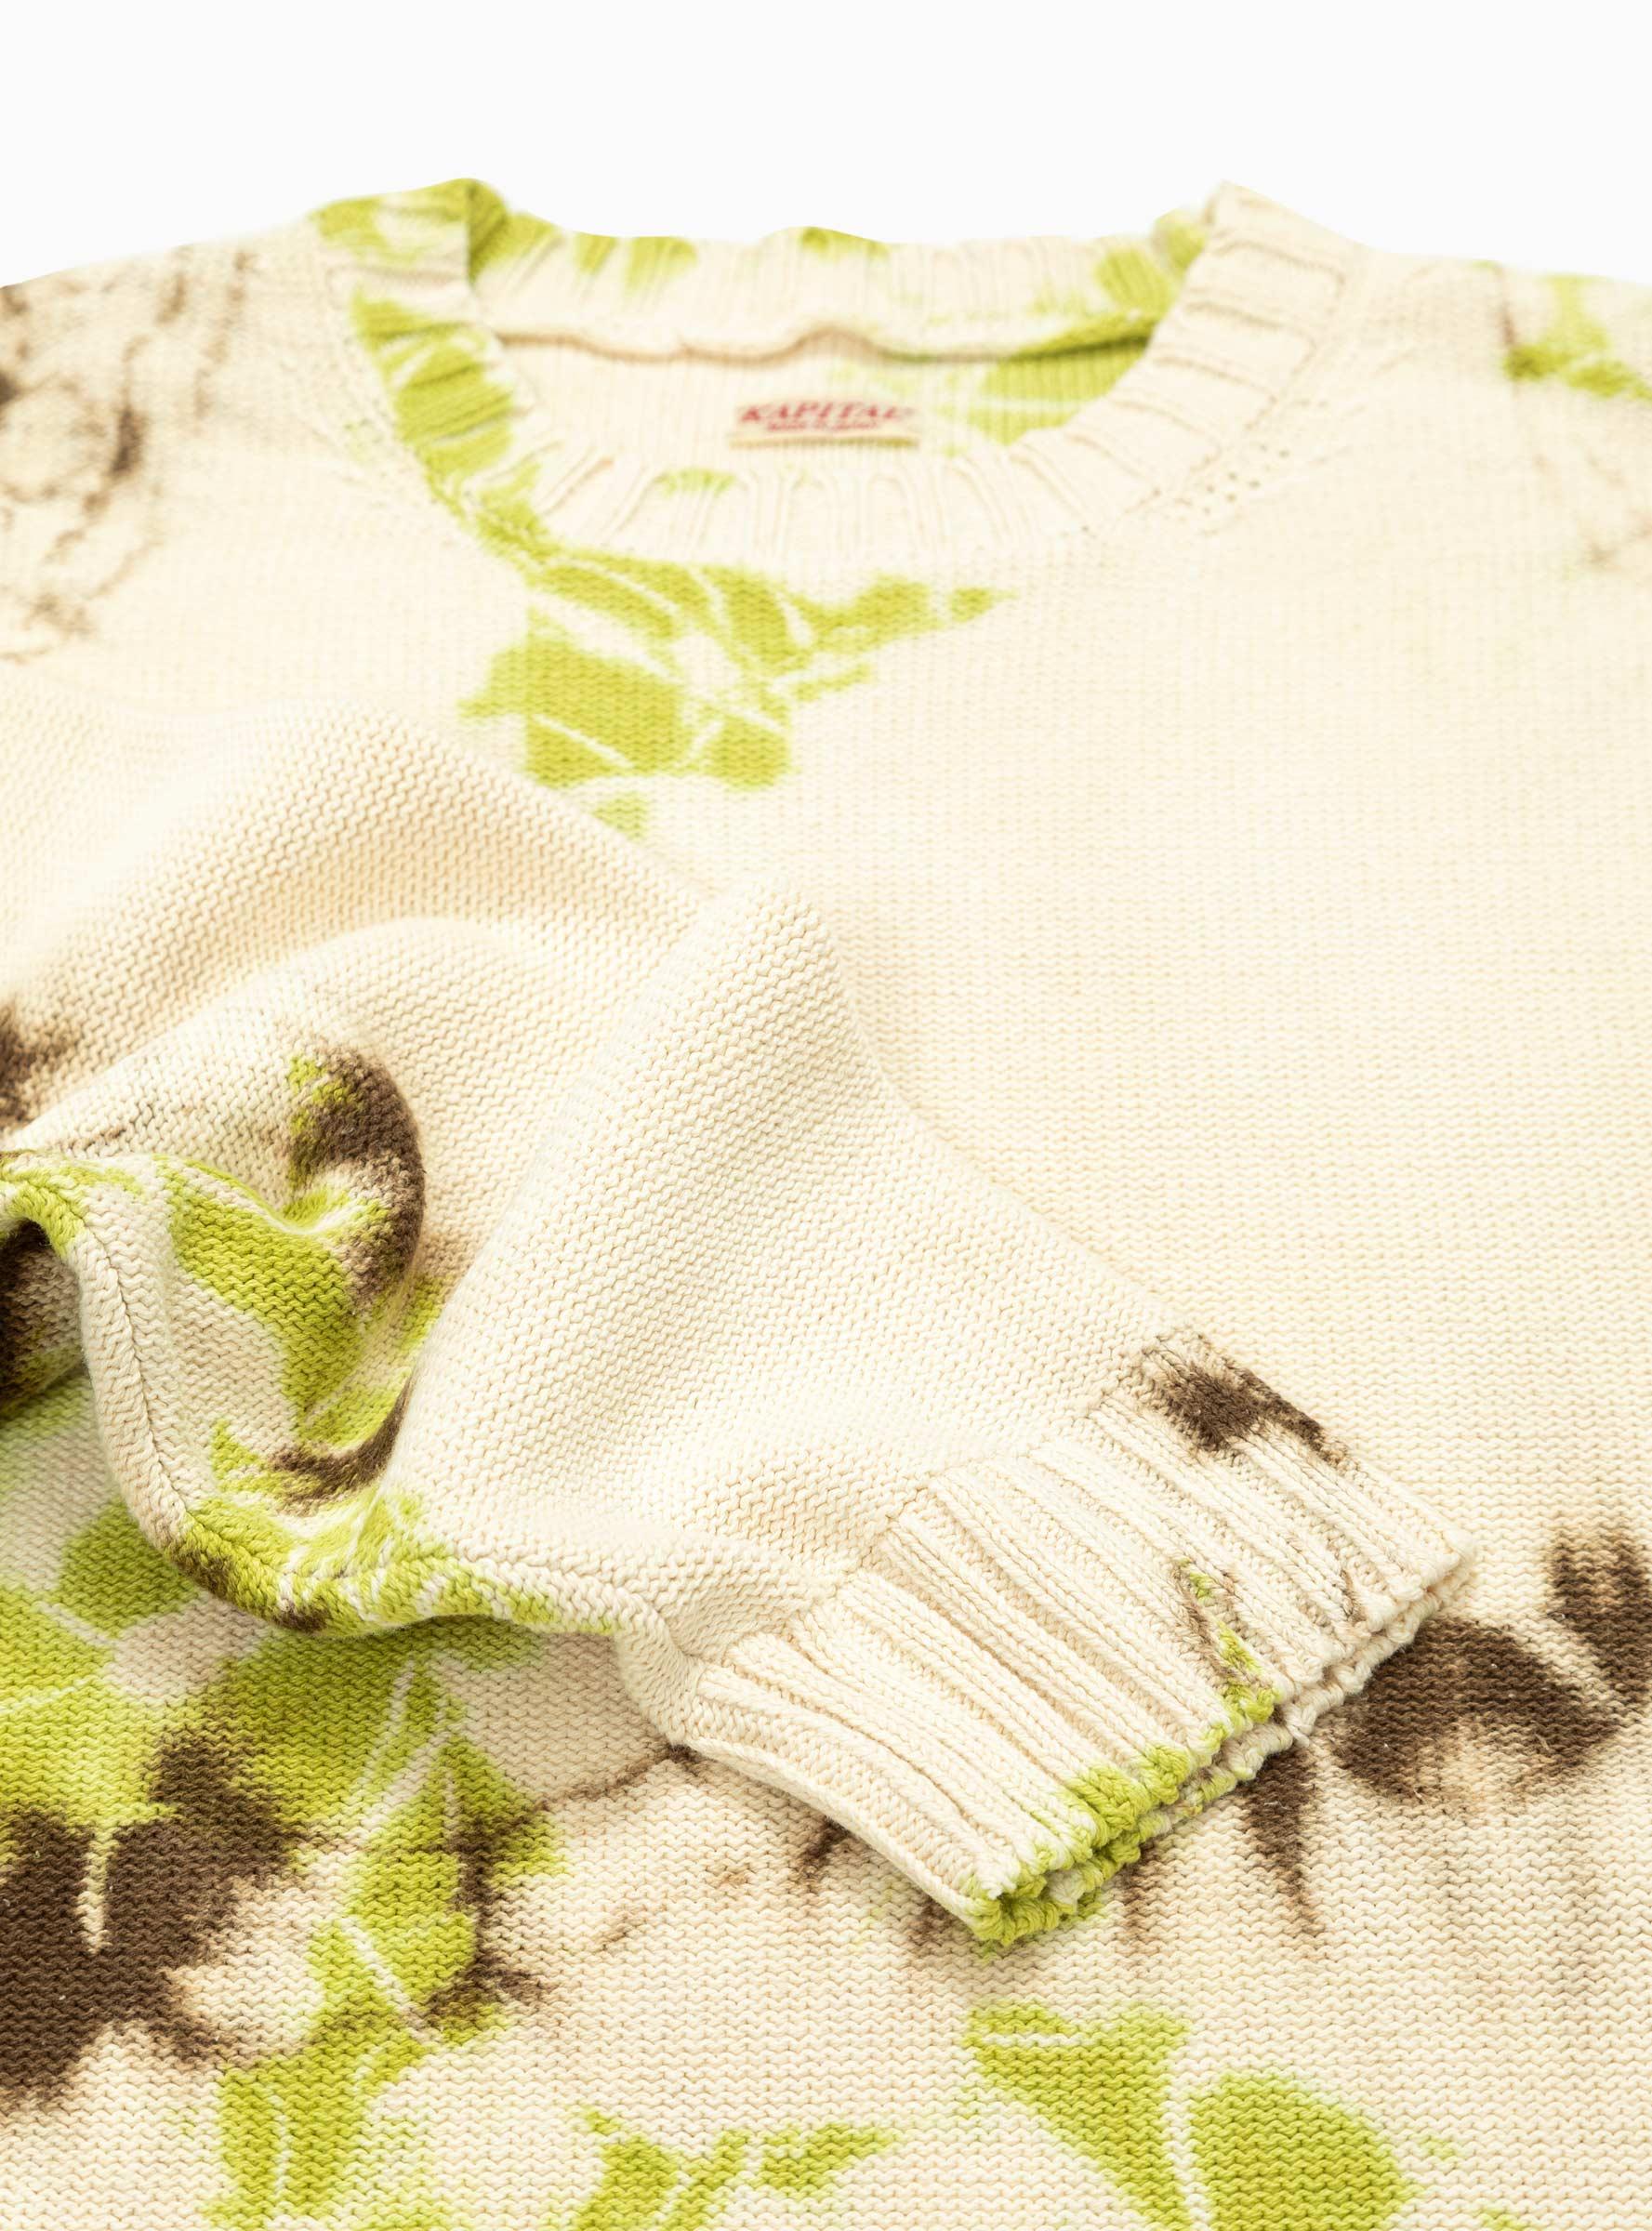 Kapital 5g Knit Ashbury Dyed Sweater Light Green & Brown in